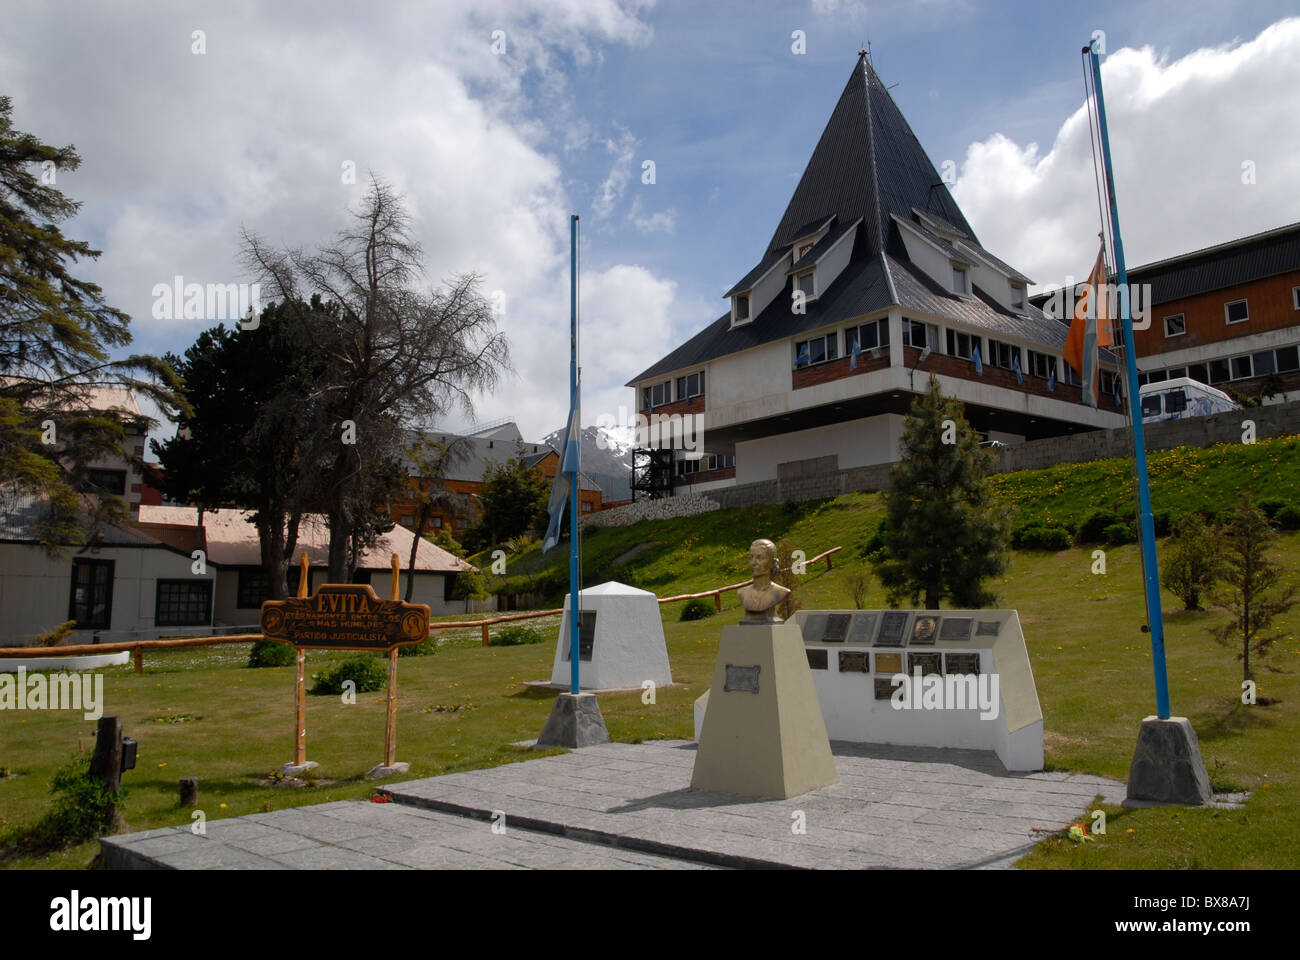 Evita memorial in from of the city hall, Ushuaia, Tierra del Fuego, Argentina Stock Photo